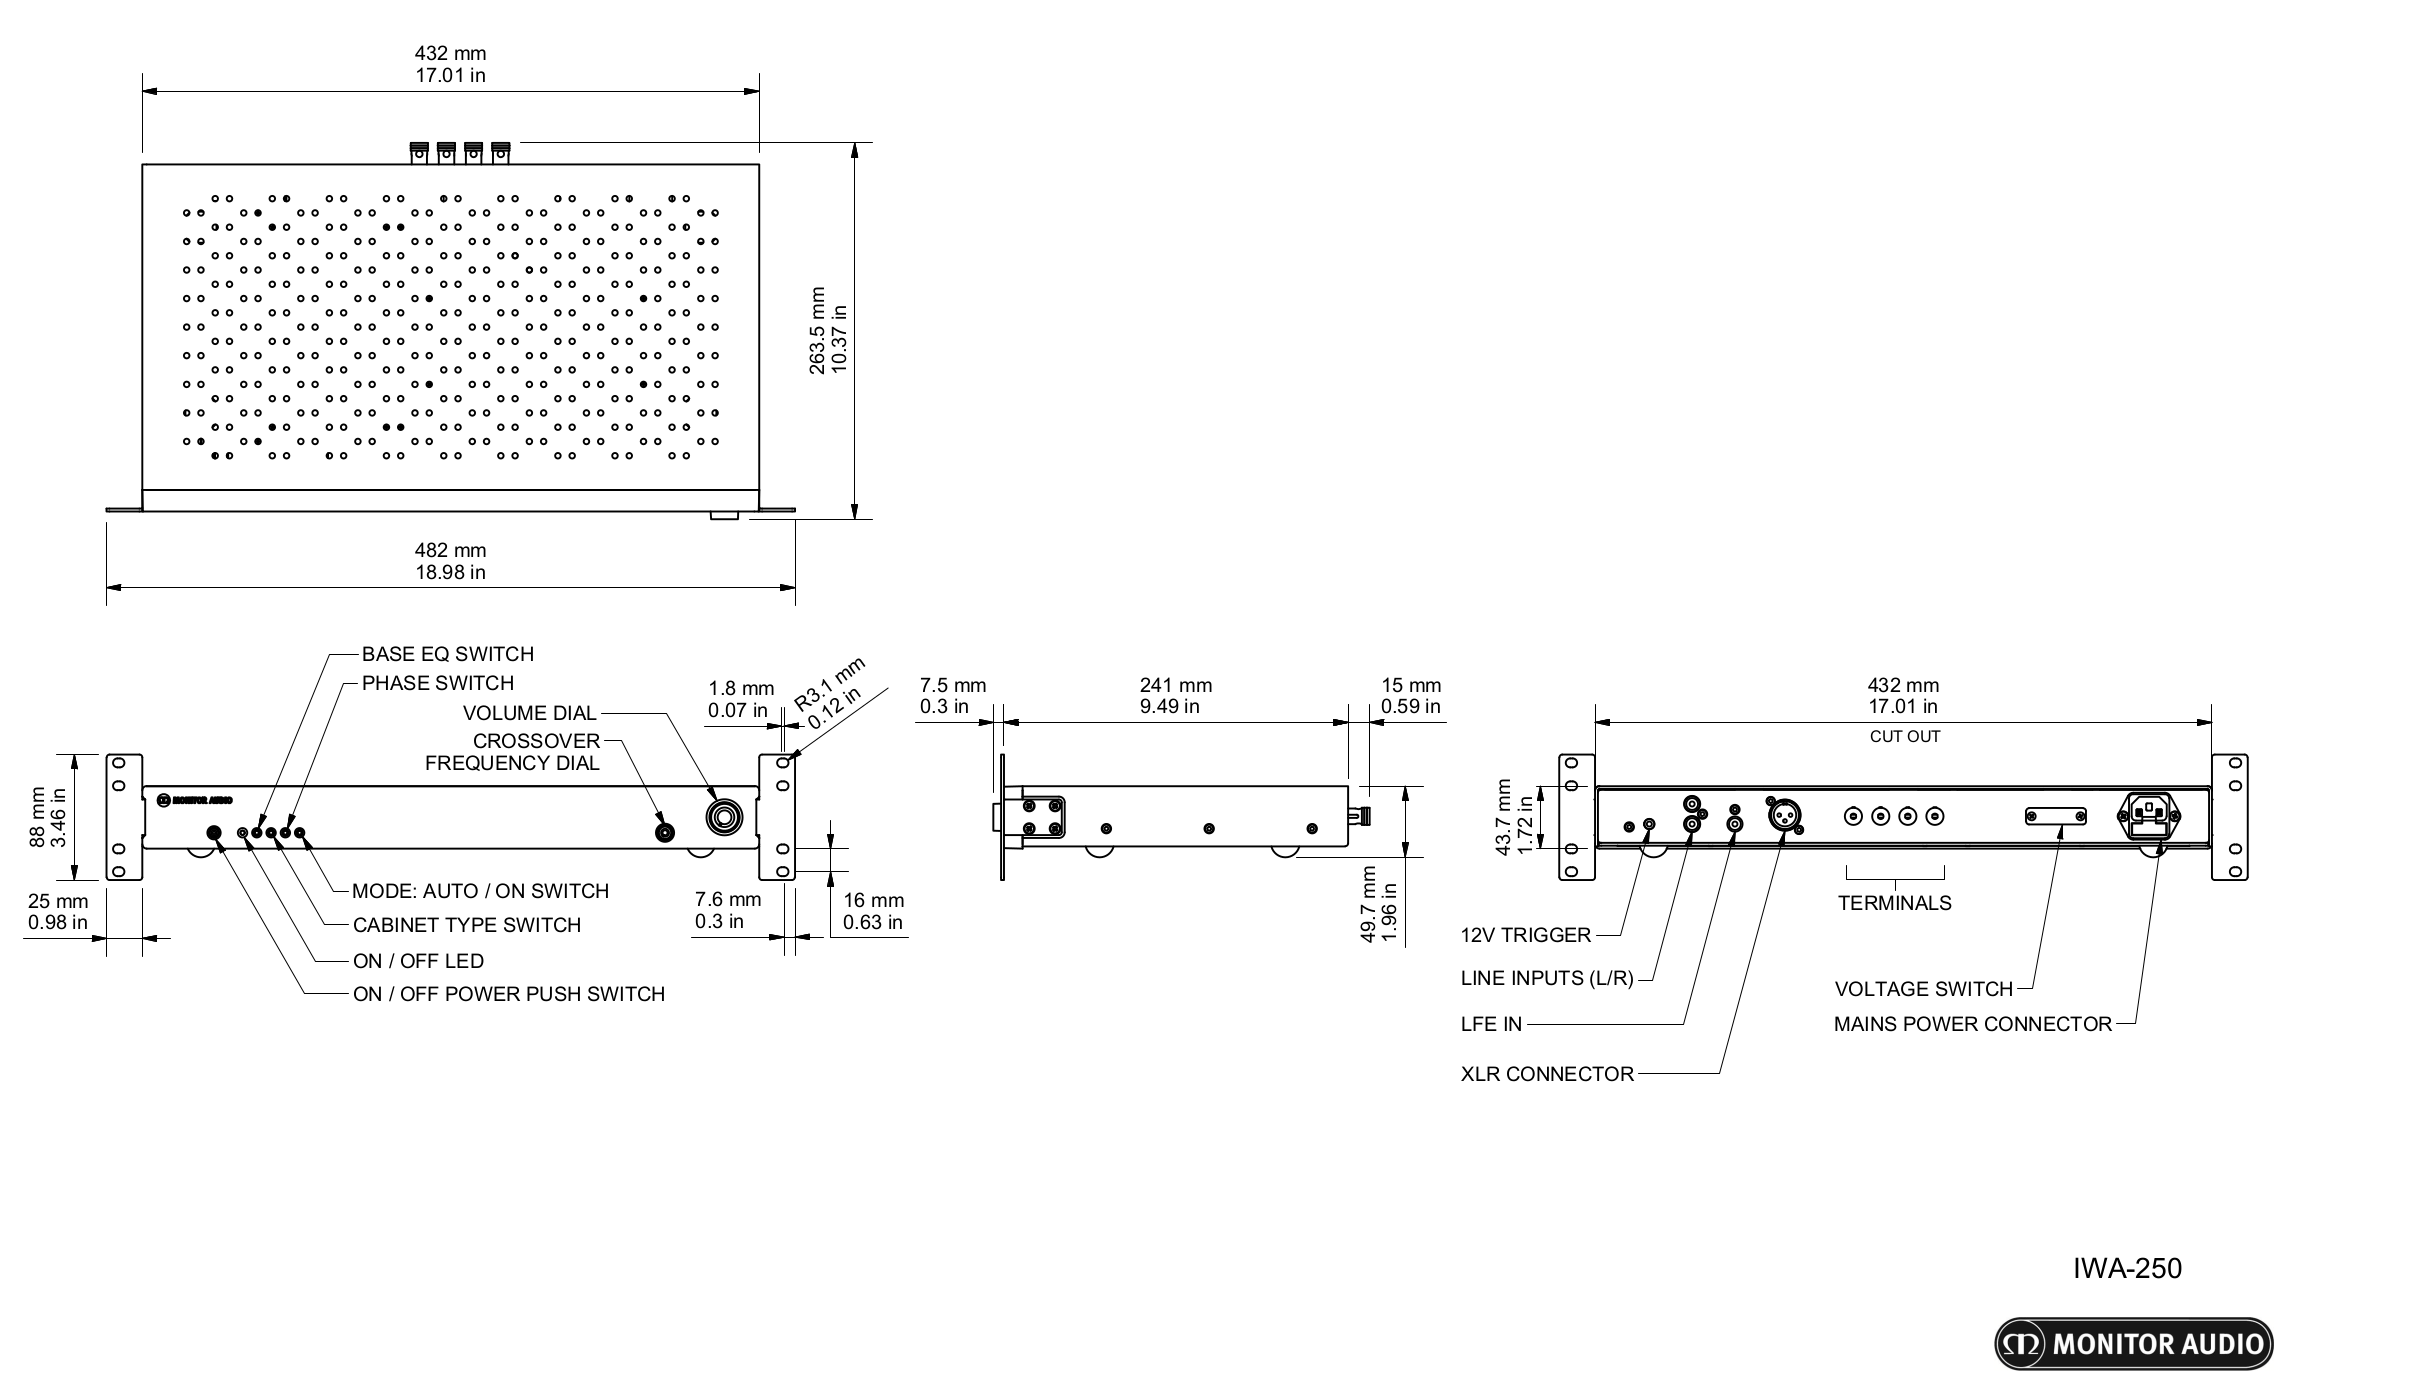 Monitor Audio IWA-250 drawning